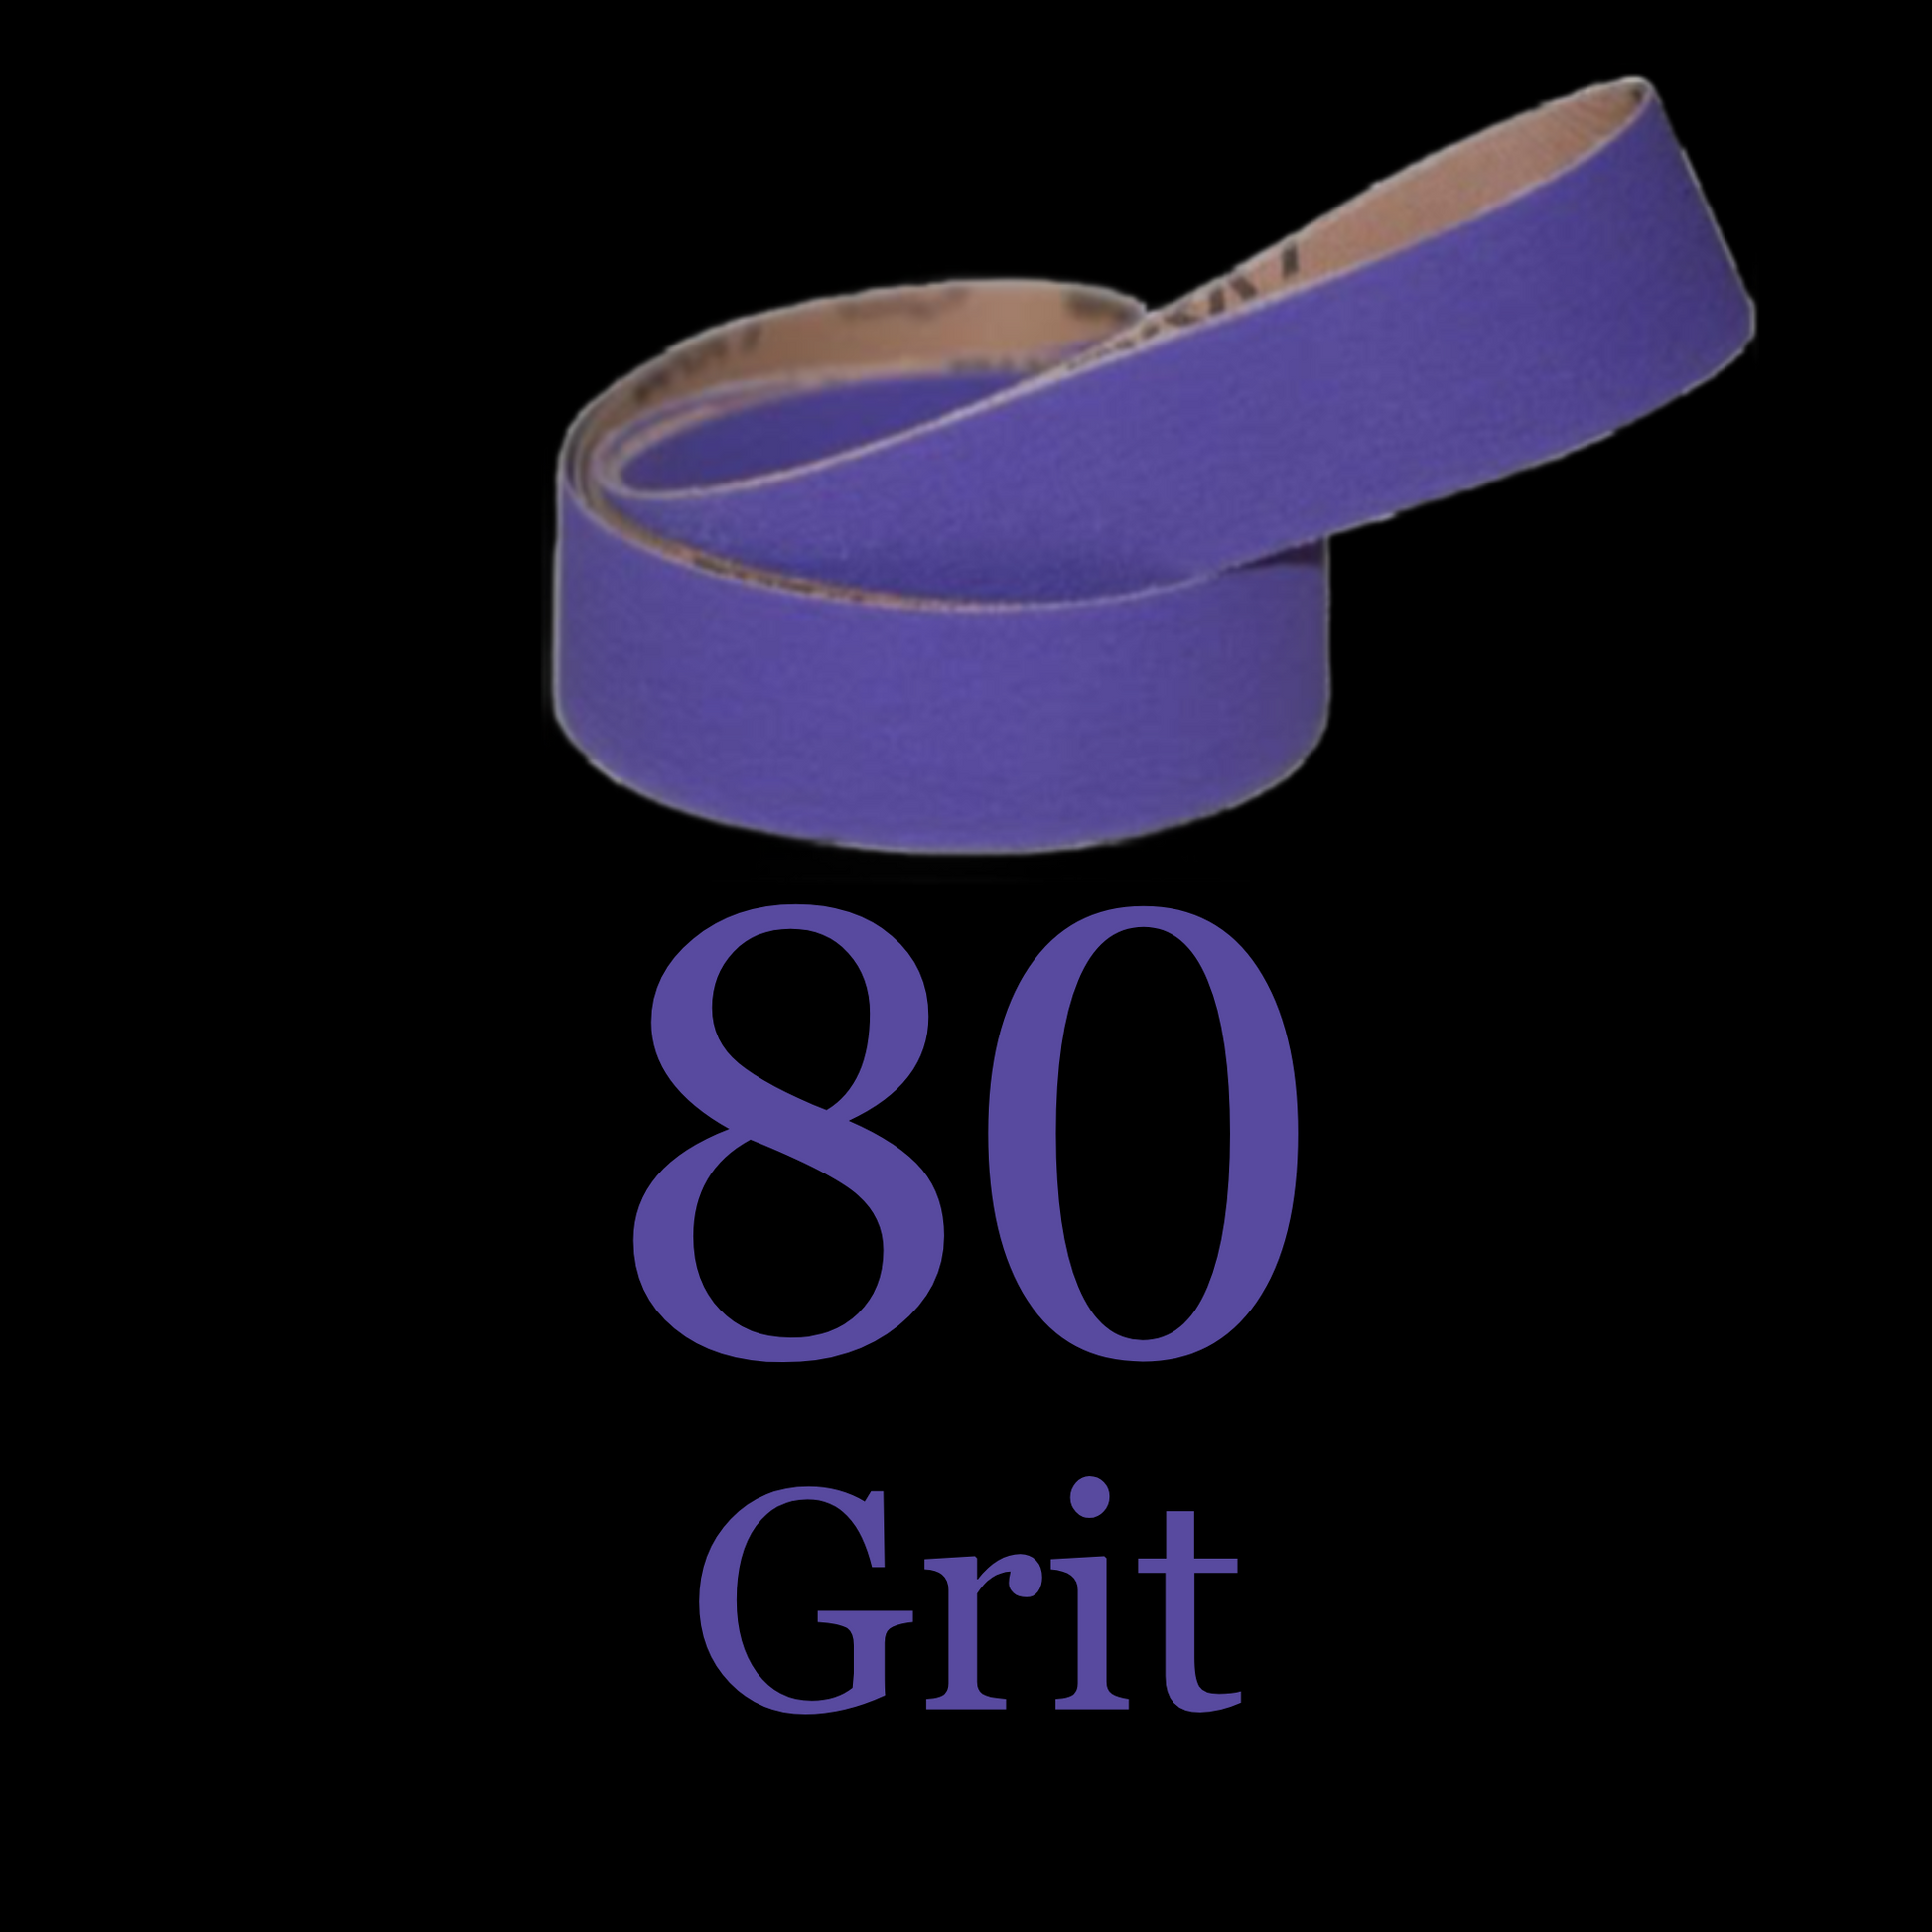 2” x 72” Reglite Premium Ceramic Belts 80 Grit